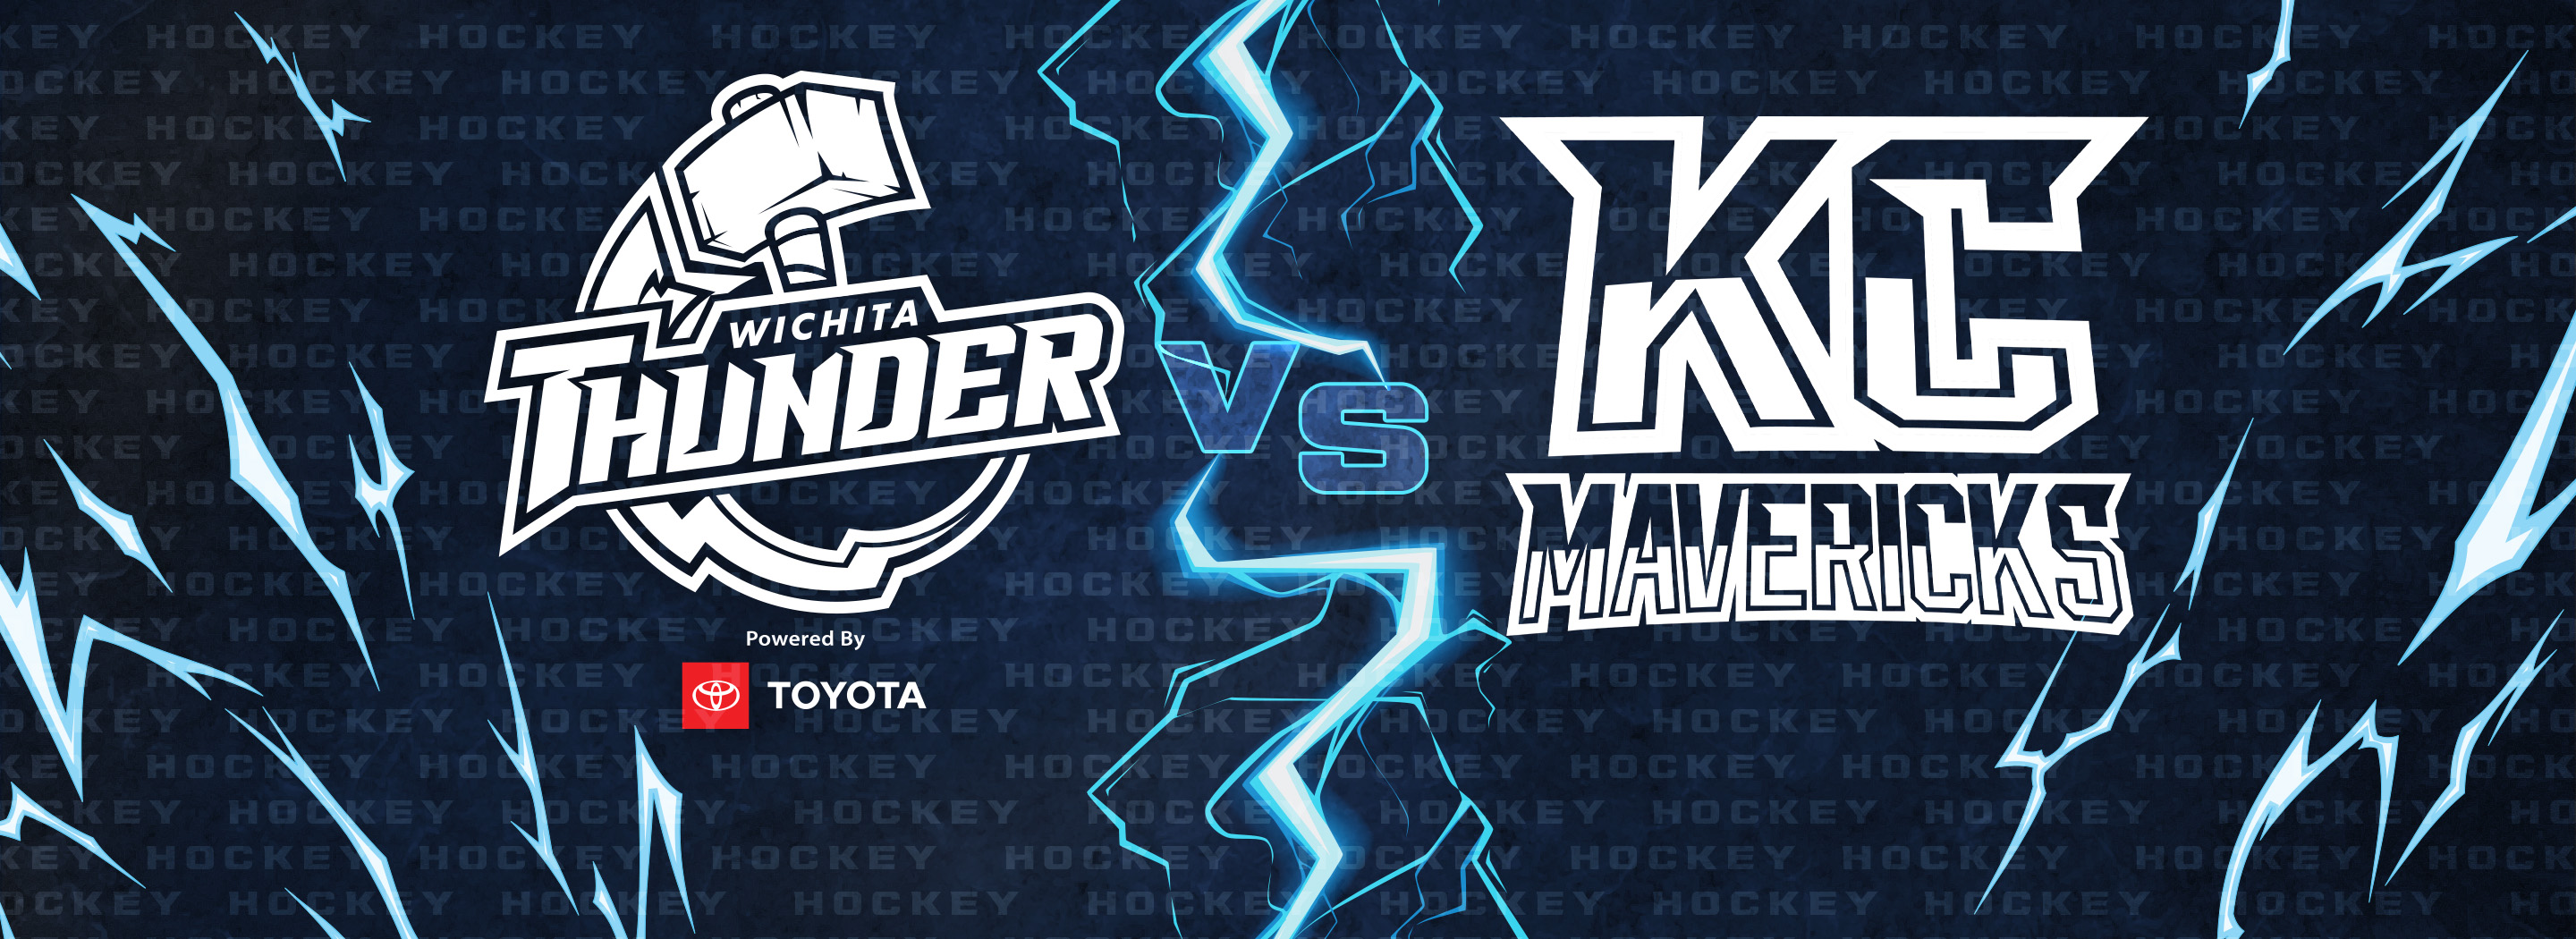 Thunder vs Kansas City at INTRUST Bank Arena - DEC 30